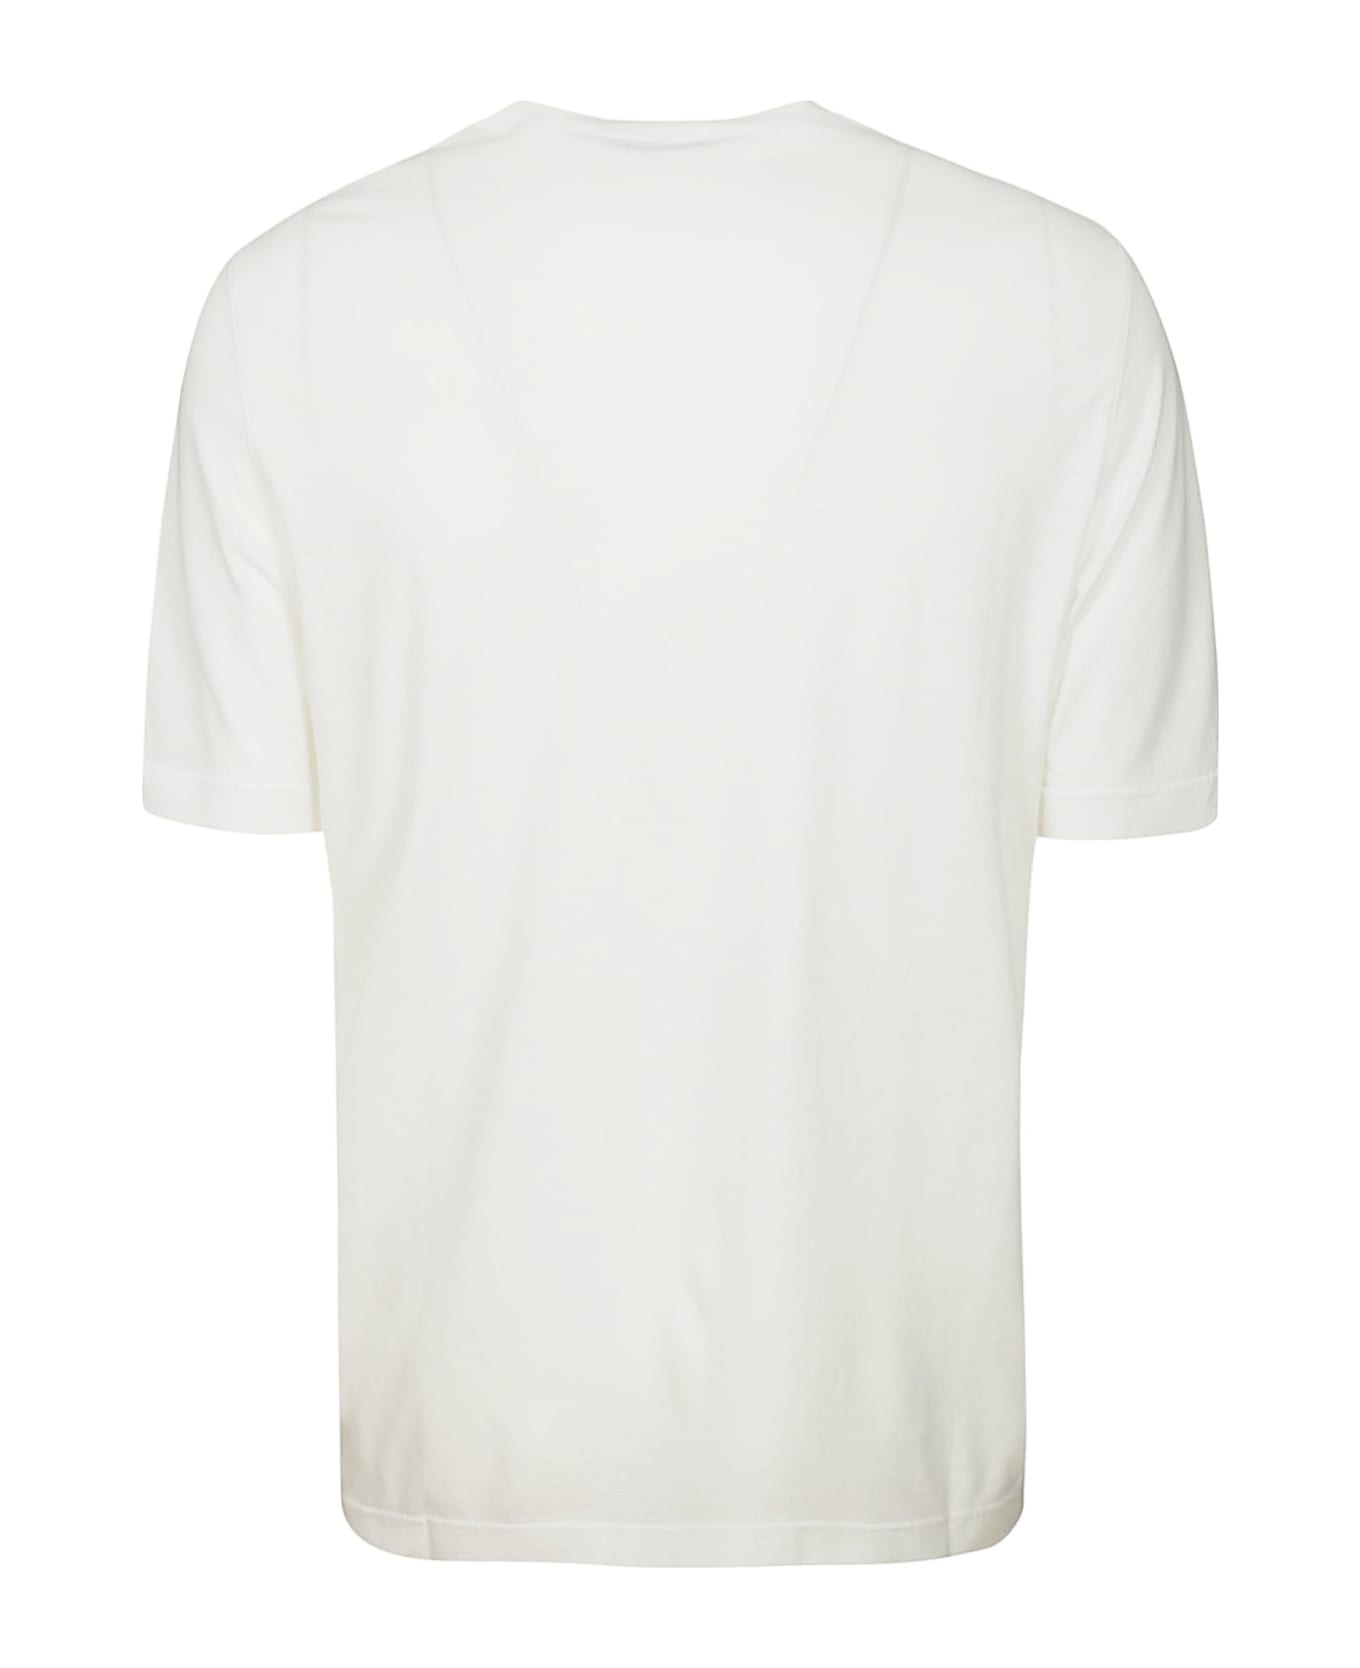 Filippo De Laurentiis Tshirt - White シャツ